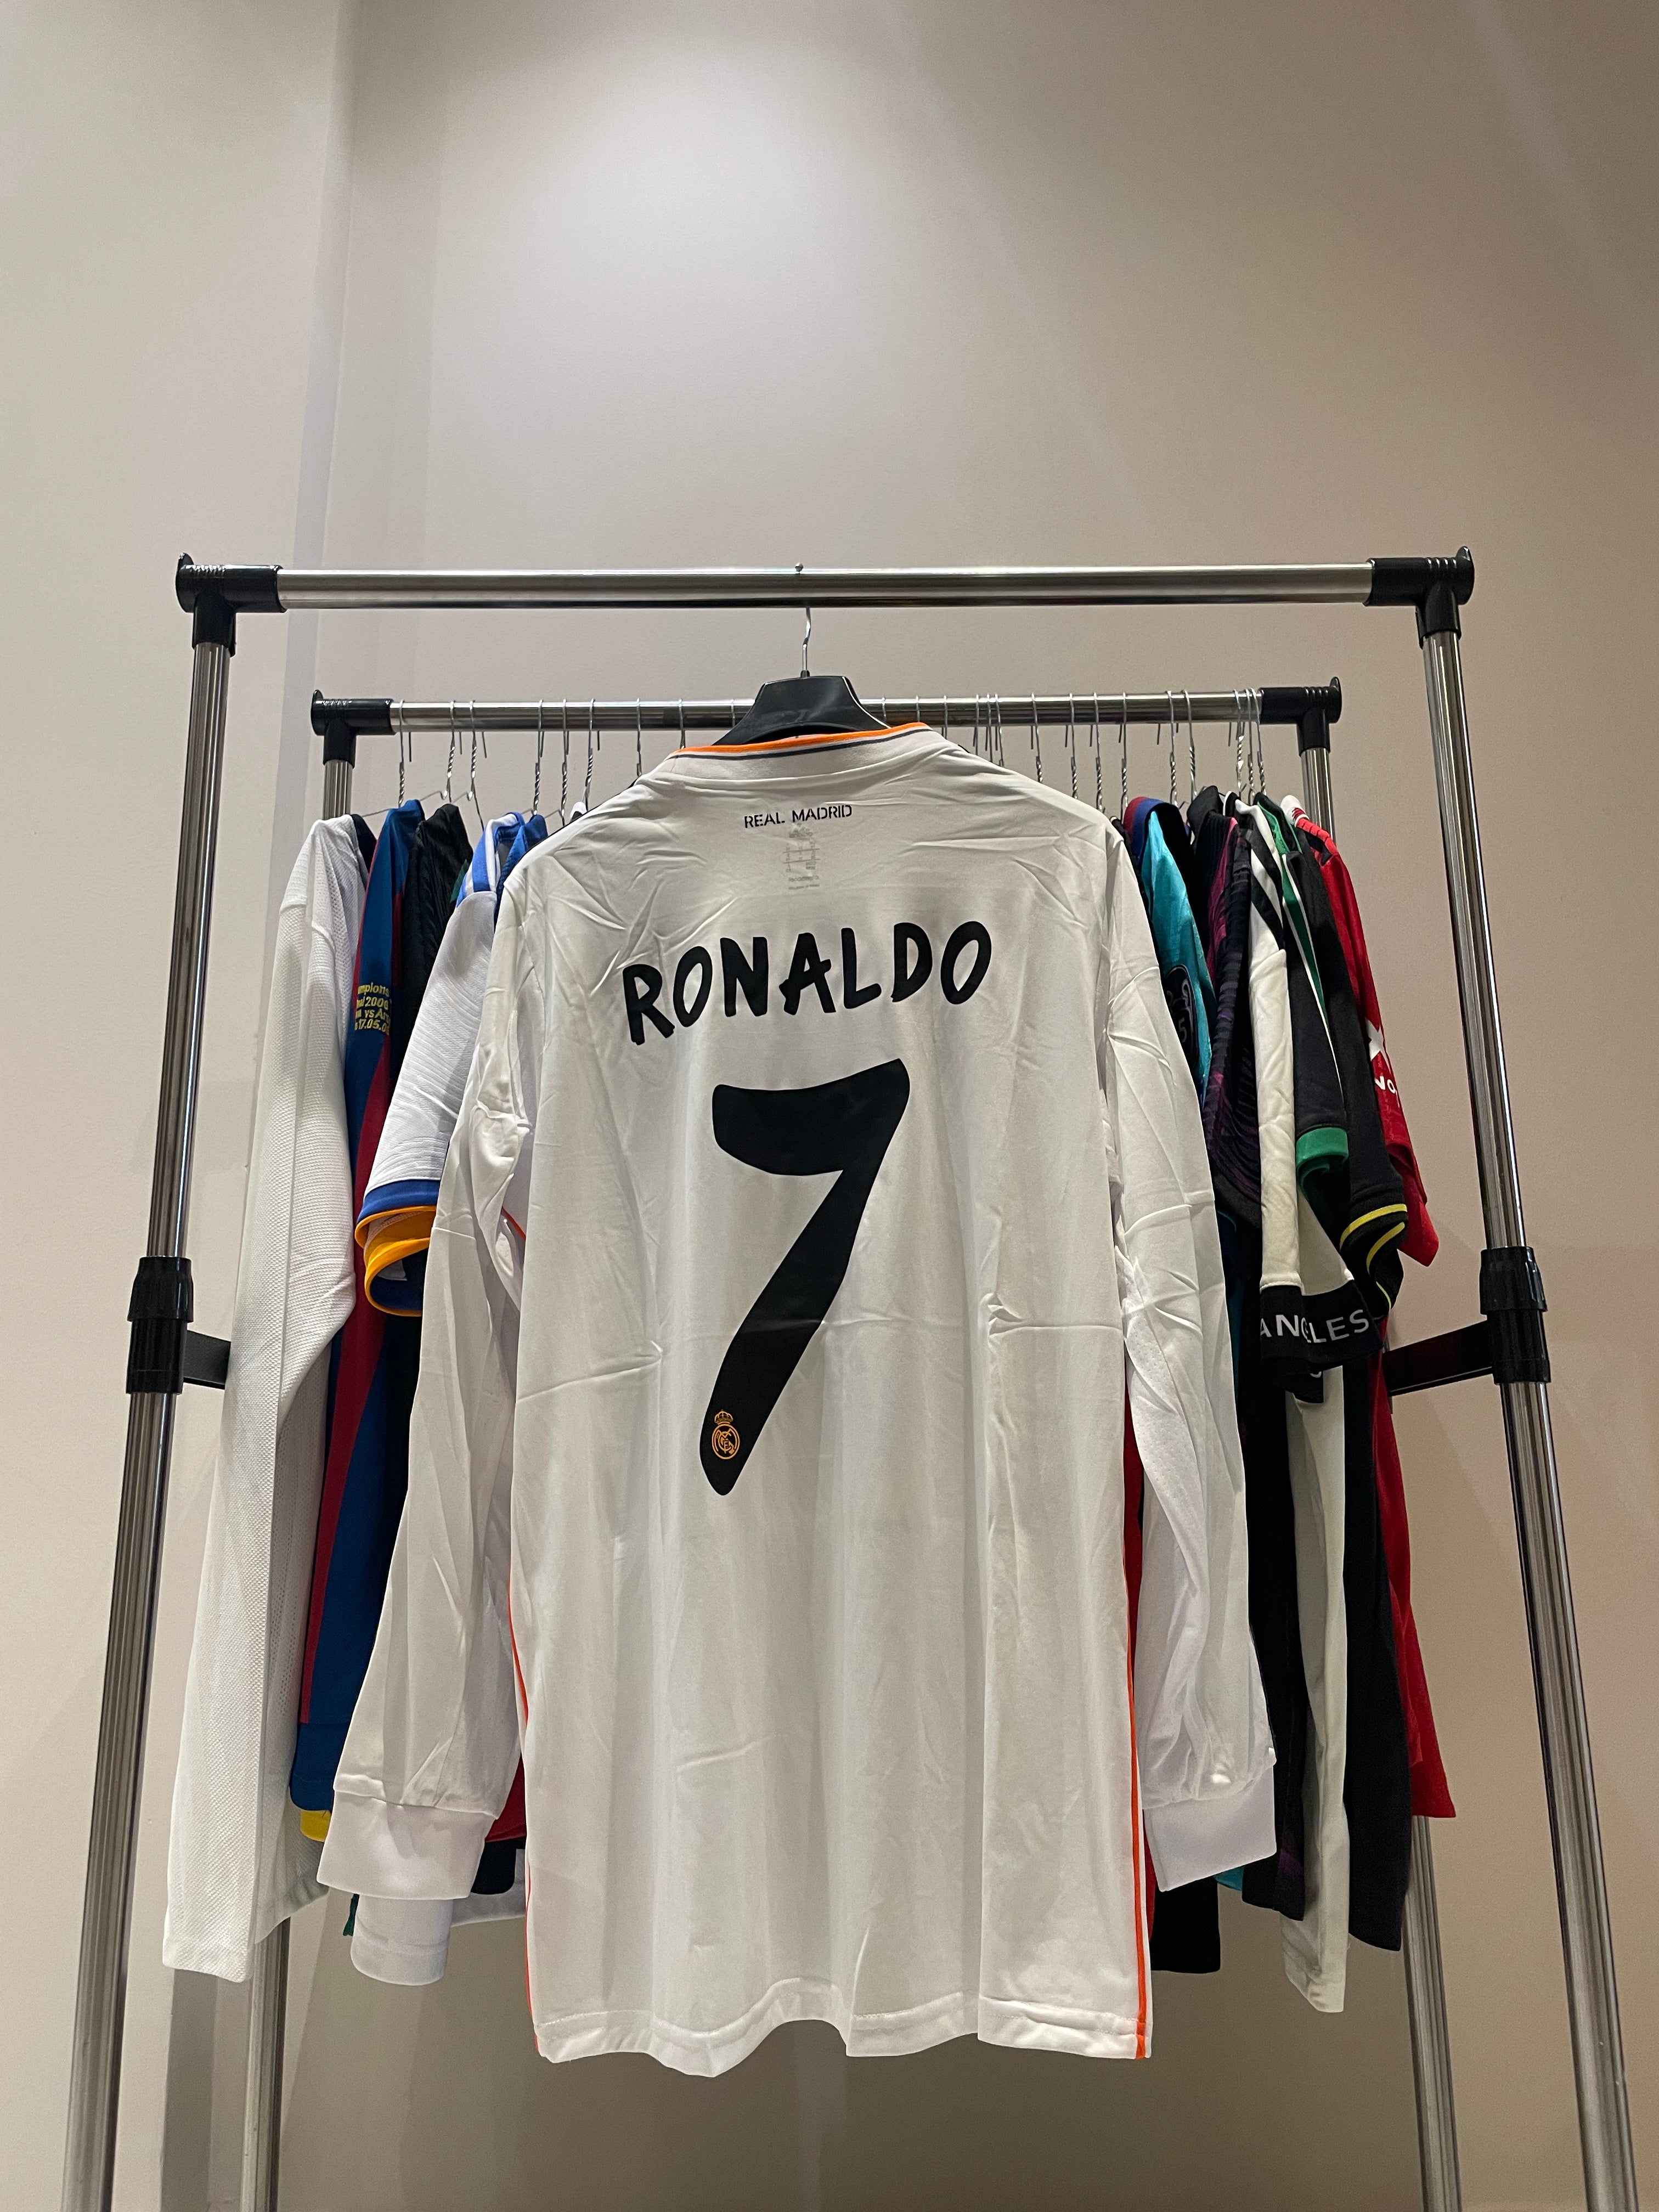 Ronaldo x Real Madrid